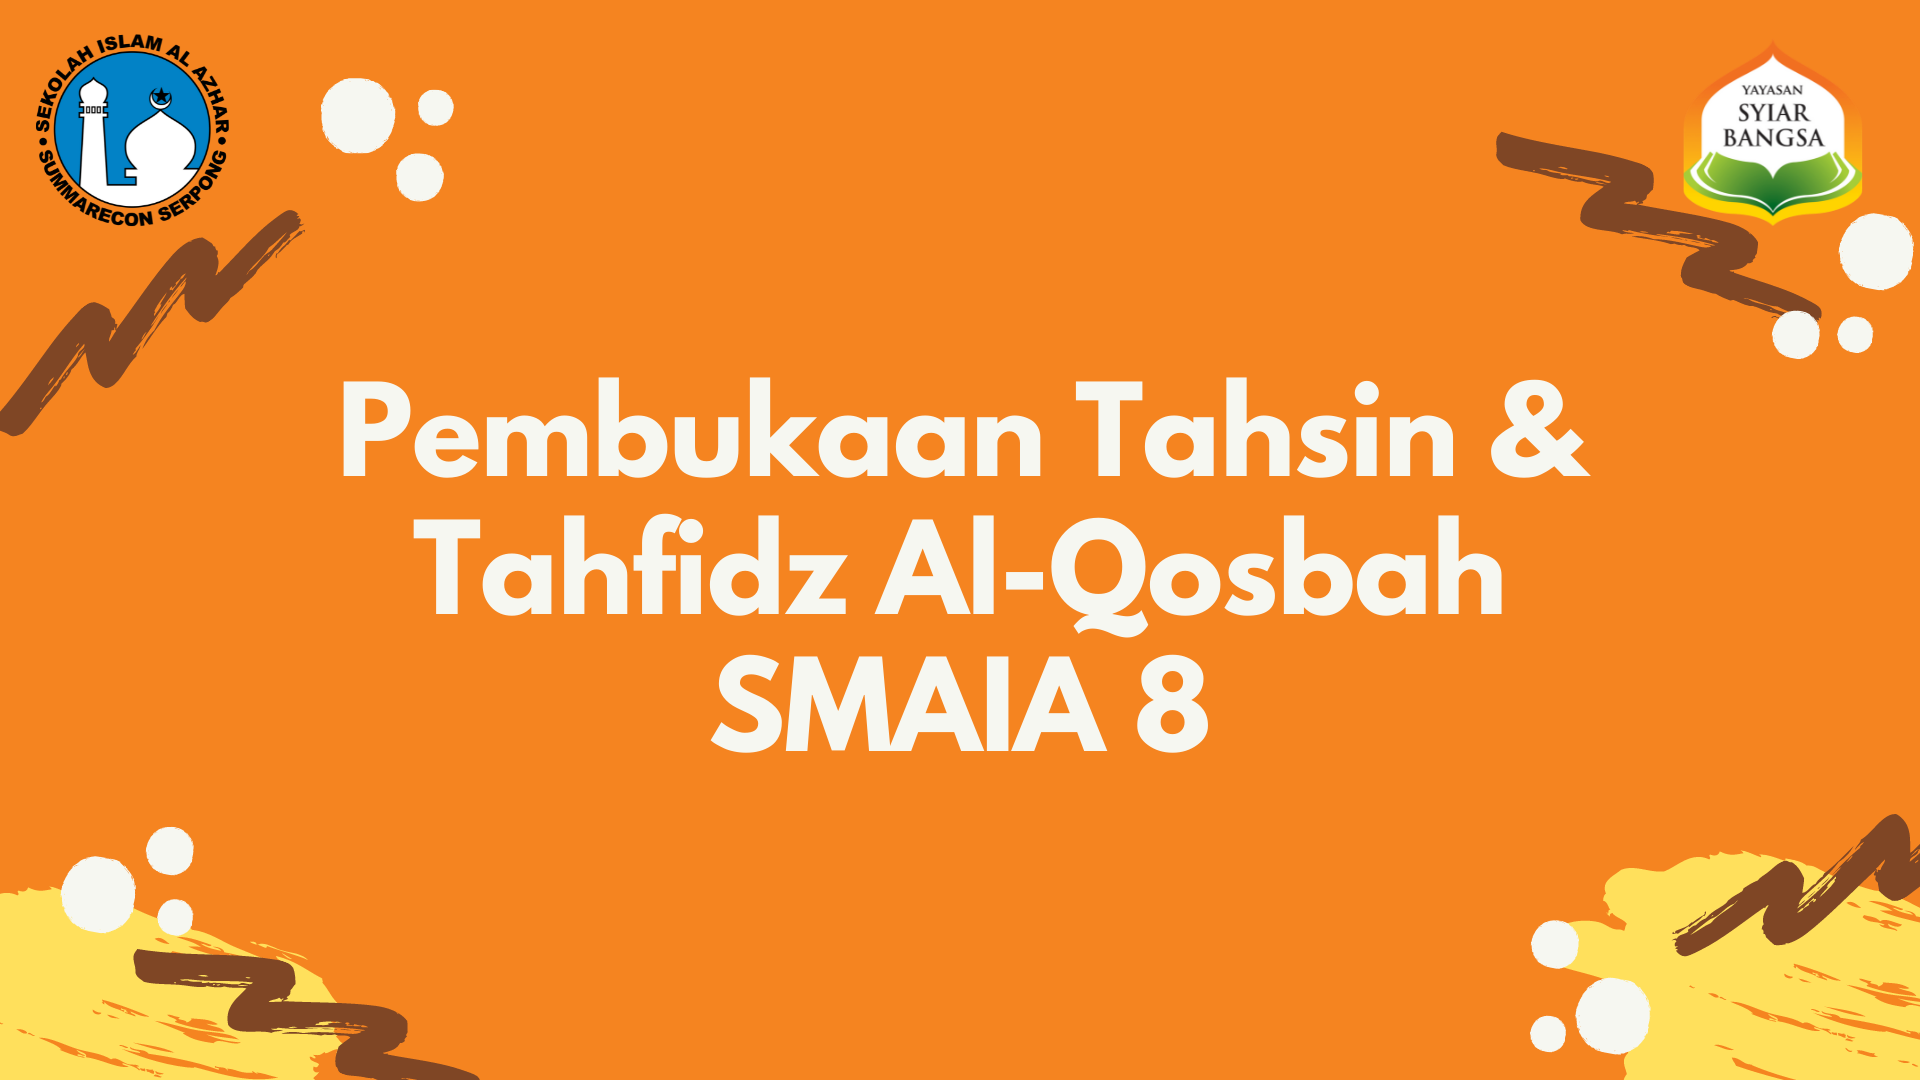 Pembukaan Tahsin & Tahfidz Al-Qosbah SMAIA 8